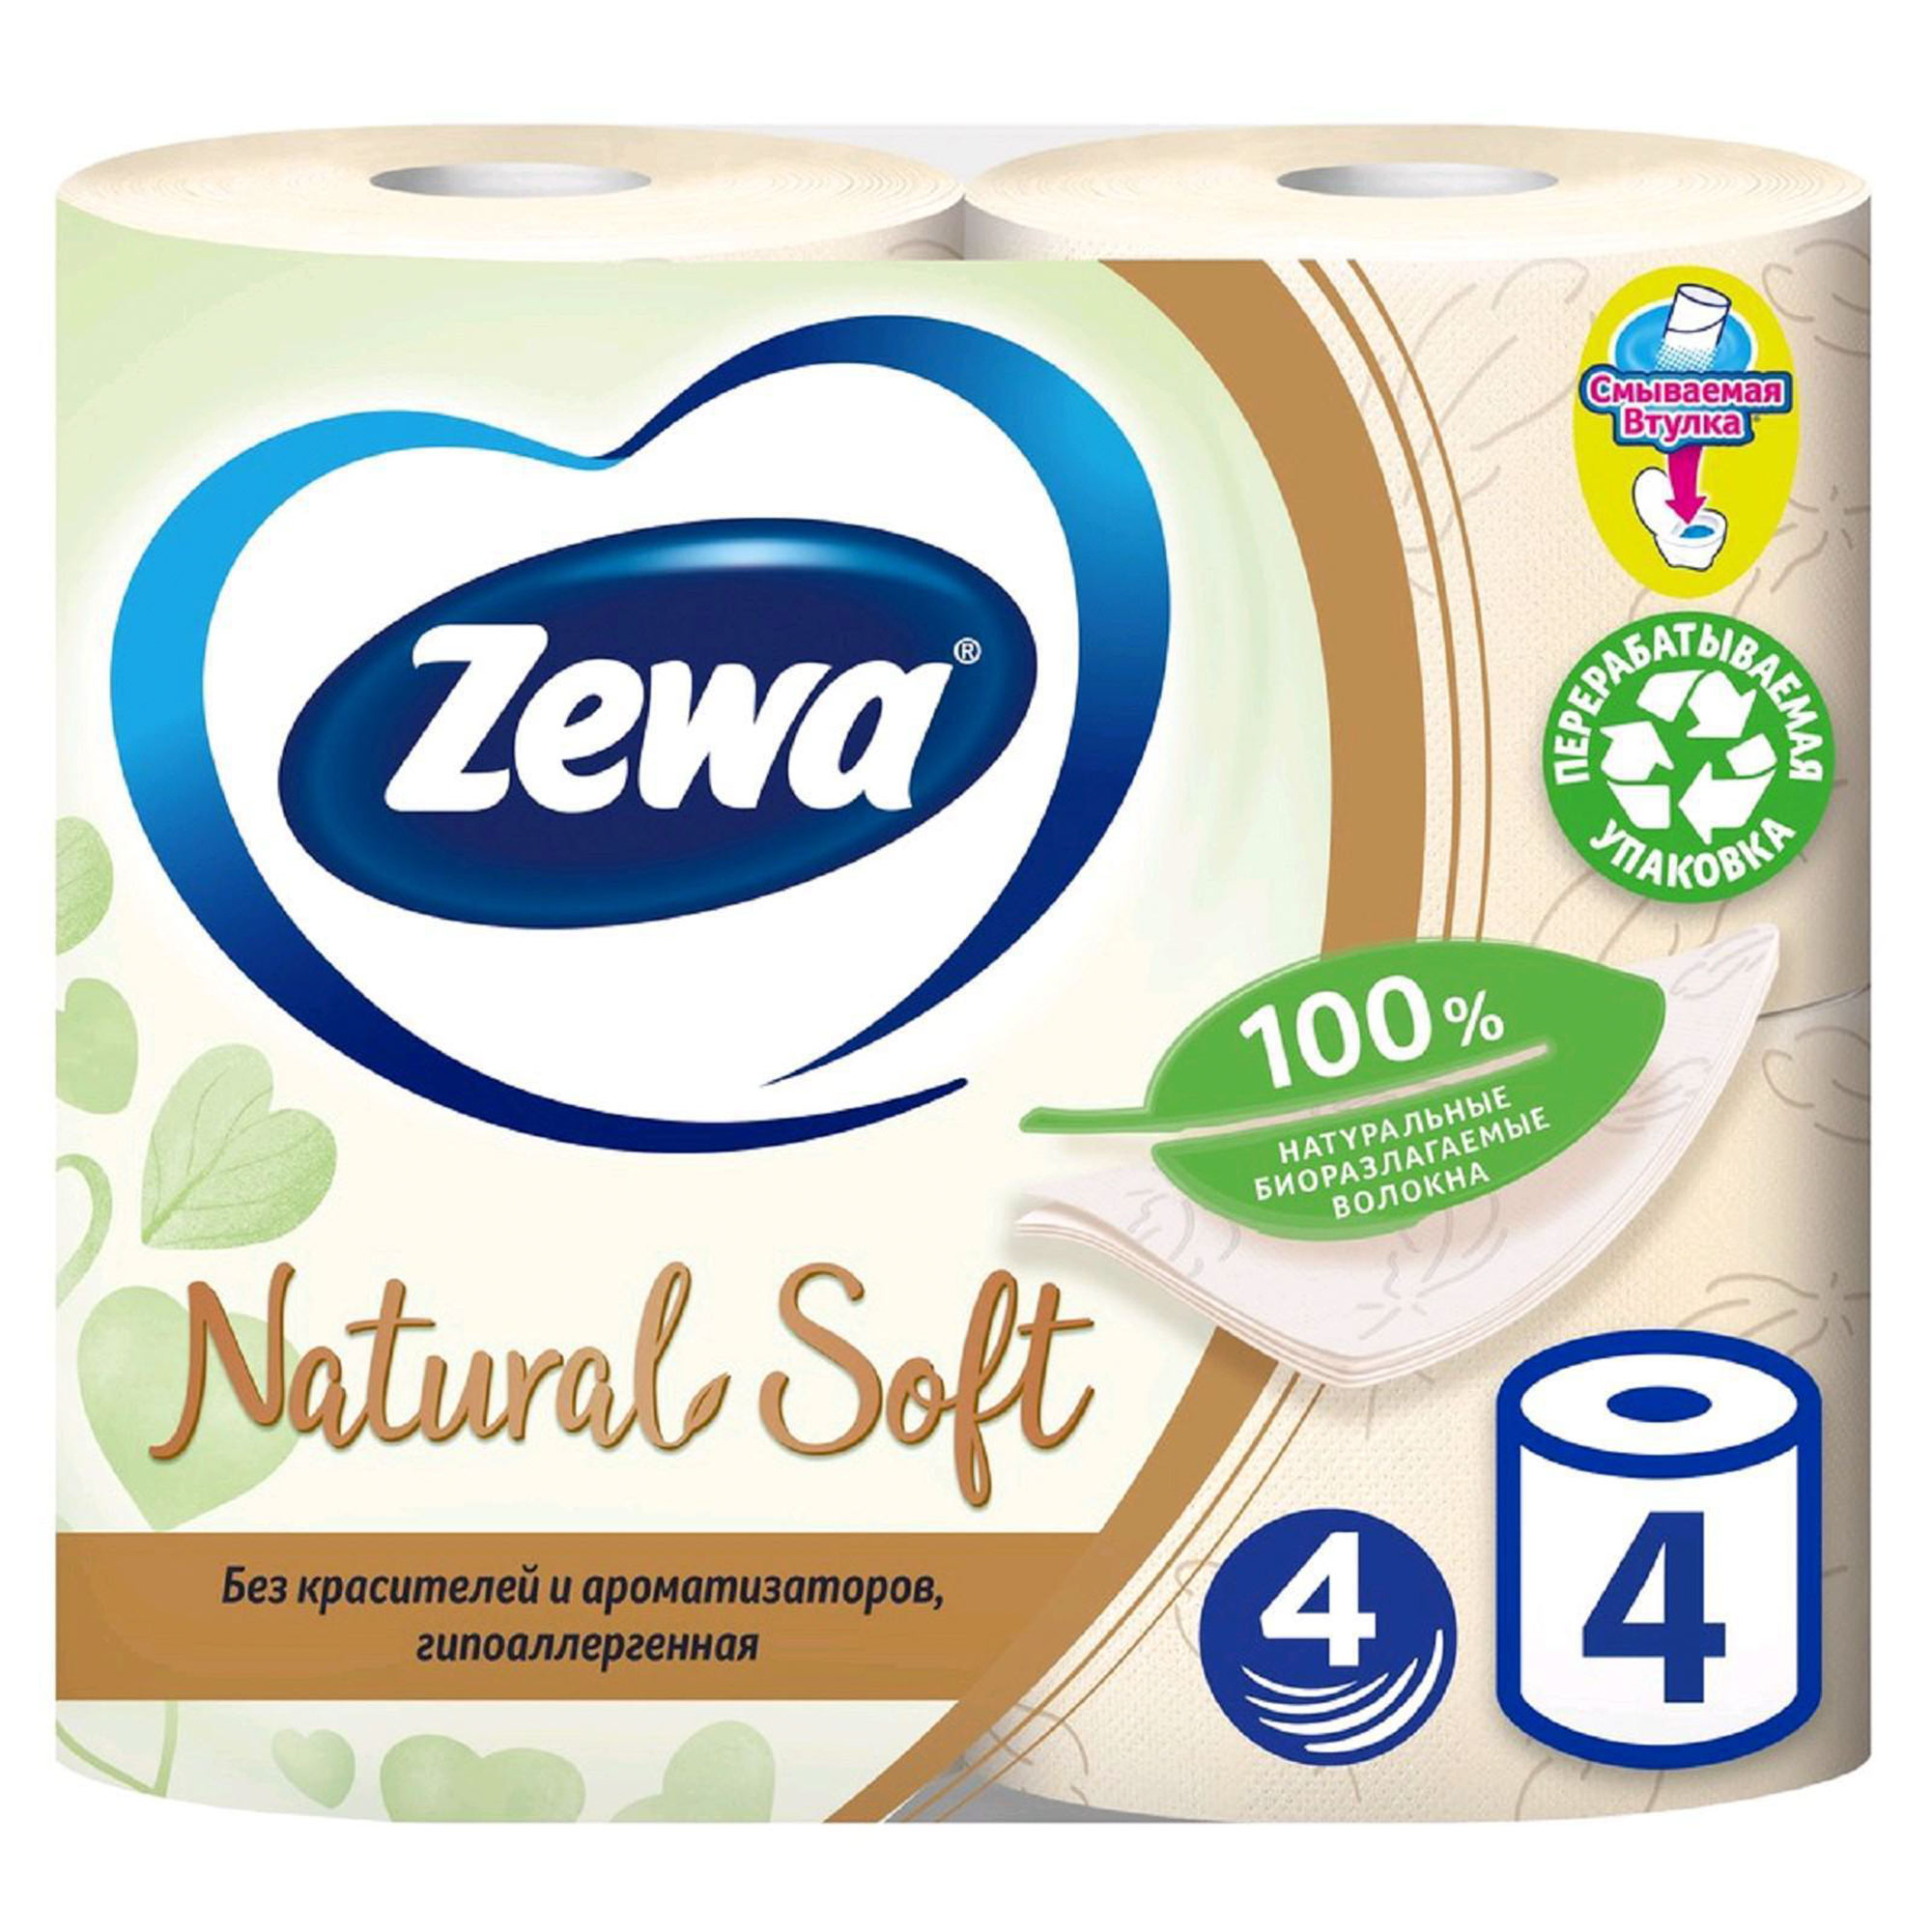 Туалетная бумага Zewa Natural Soft четырехслойная 4 шт влажная туалетная бумага aura 72 шт